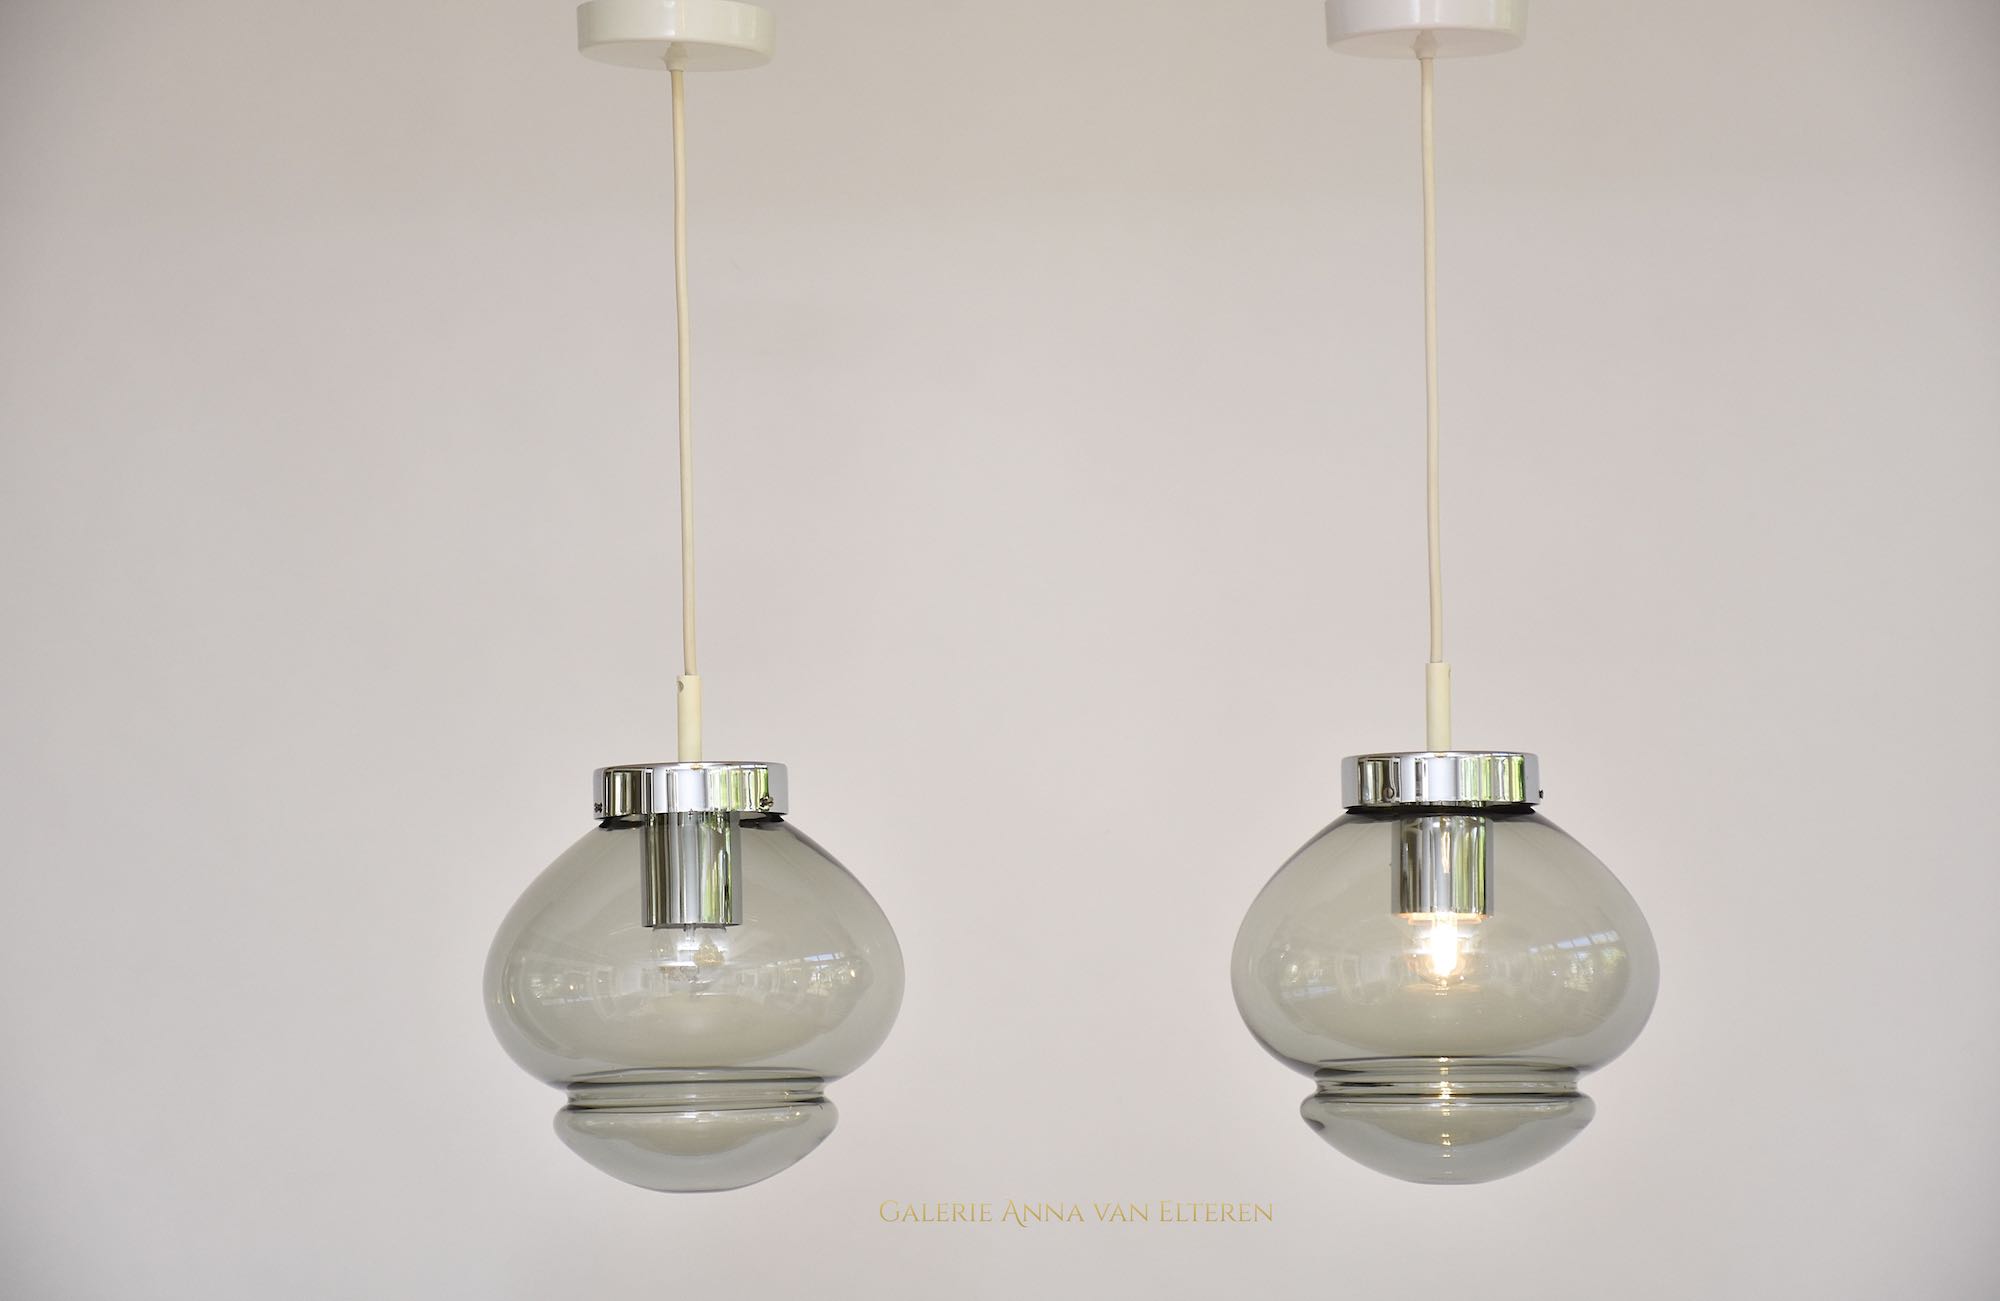 A pair of RAAK Amsterdam ceiling lamps